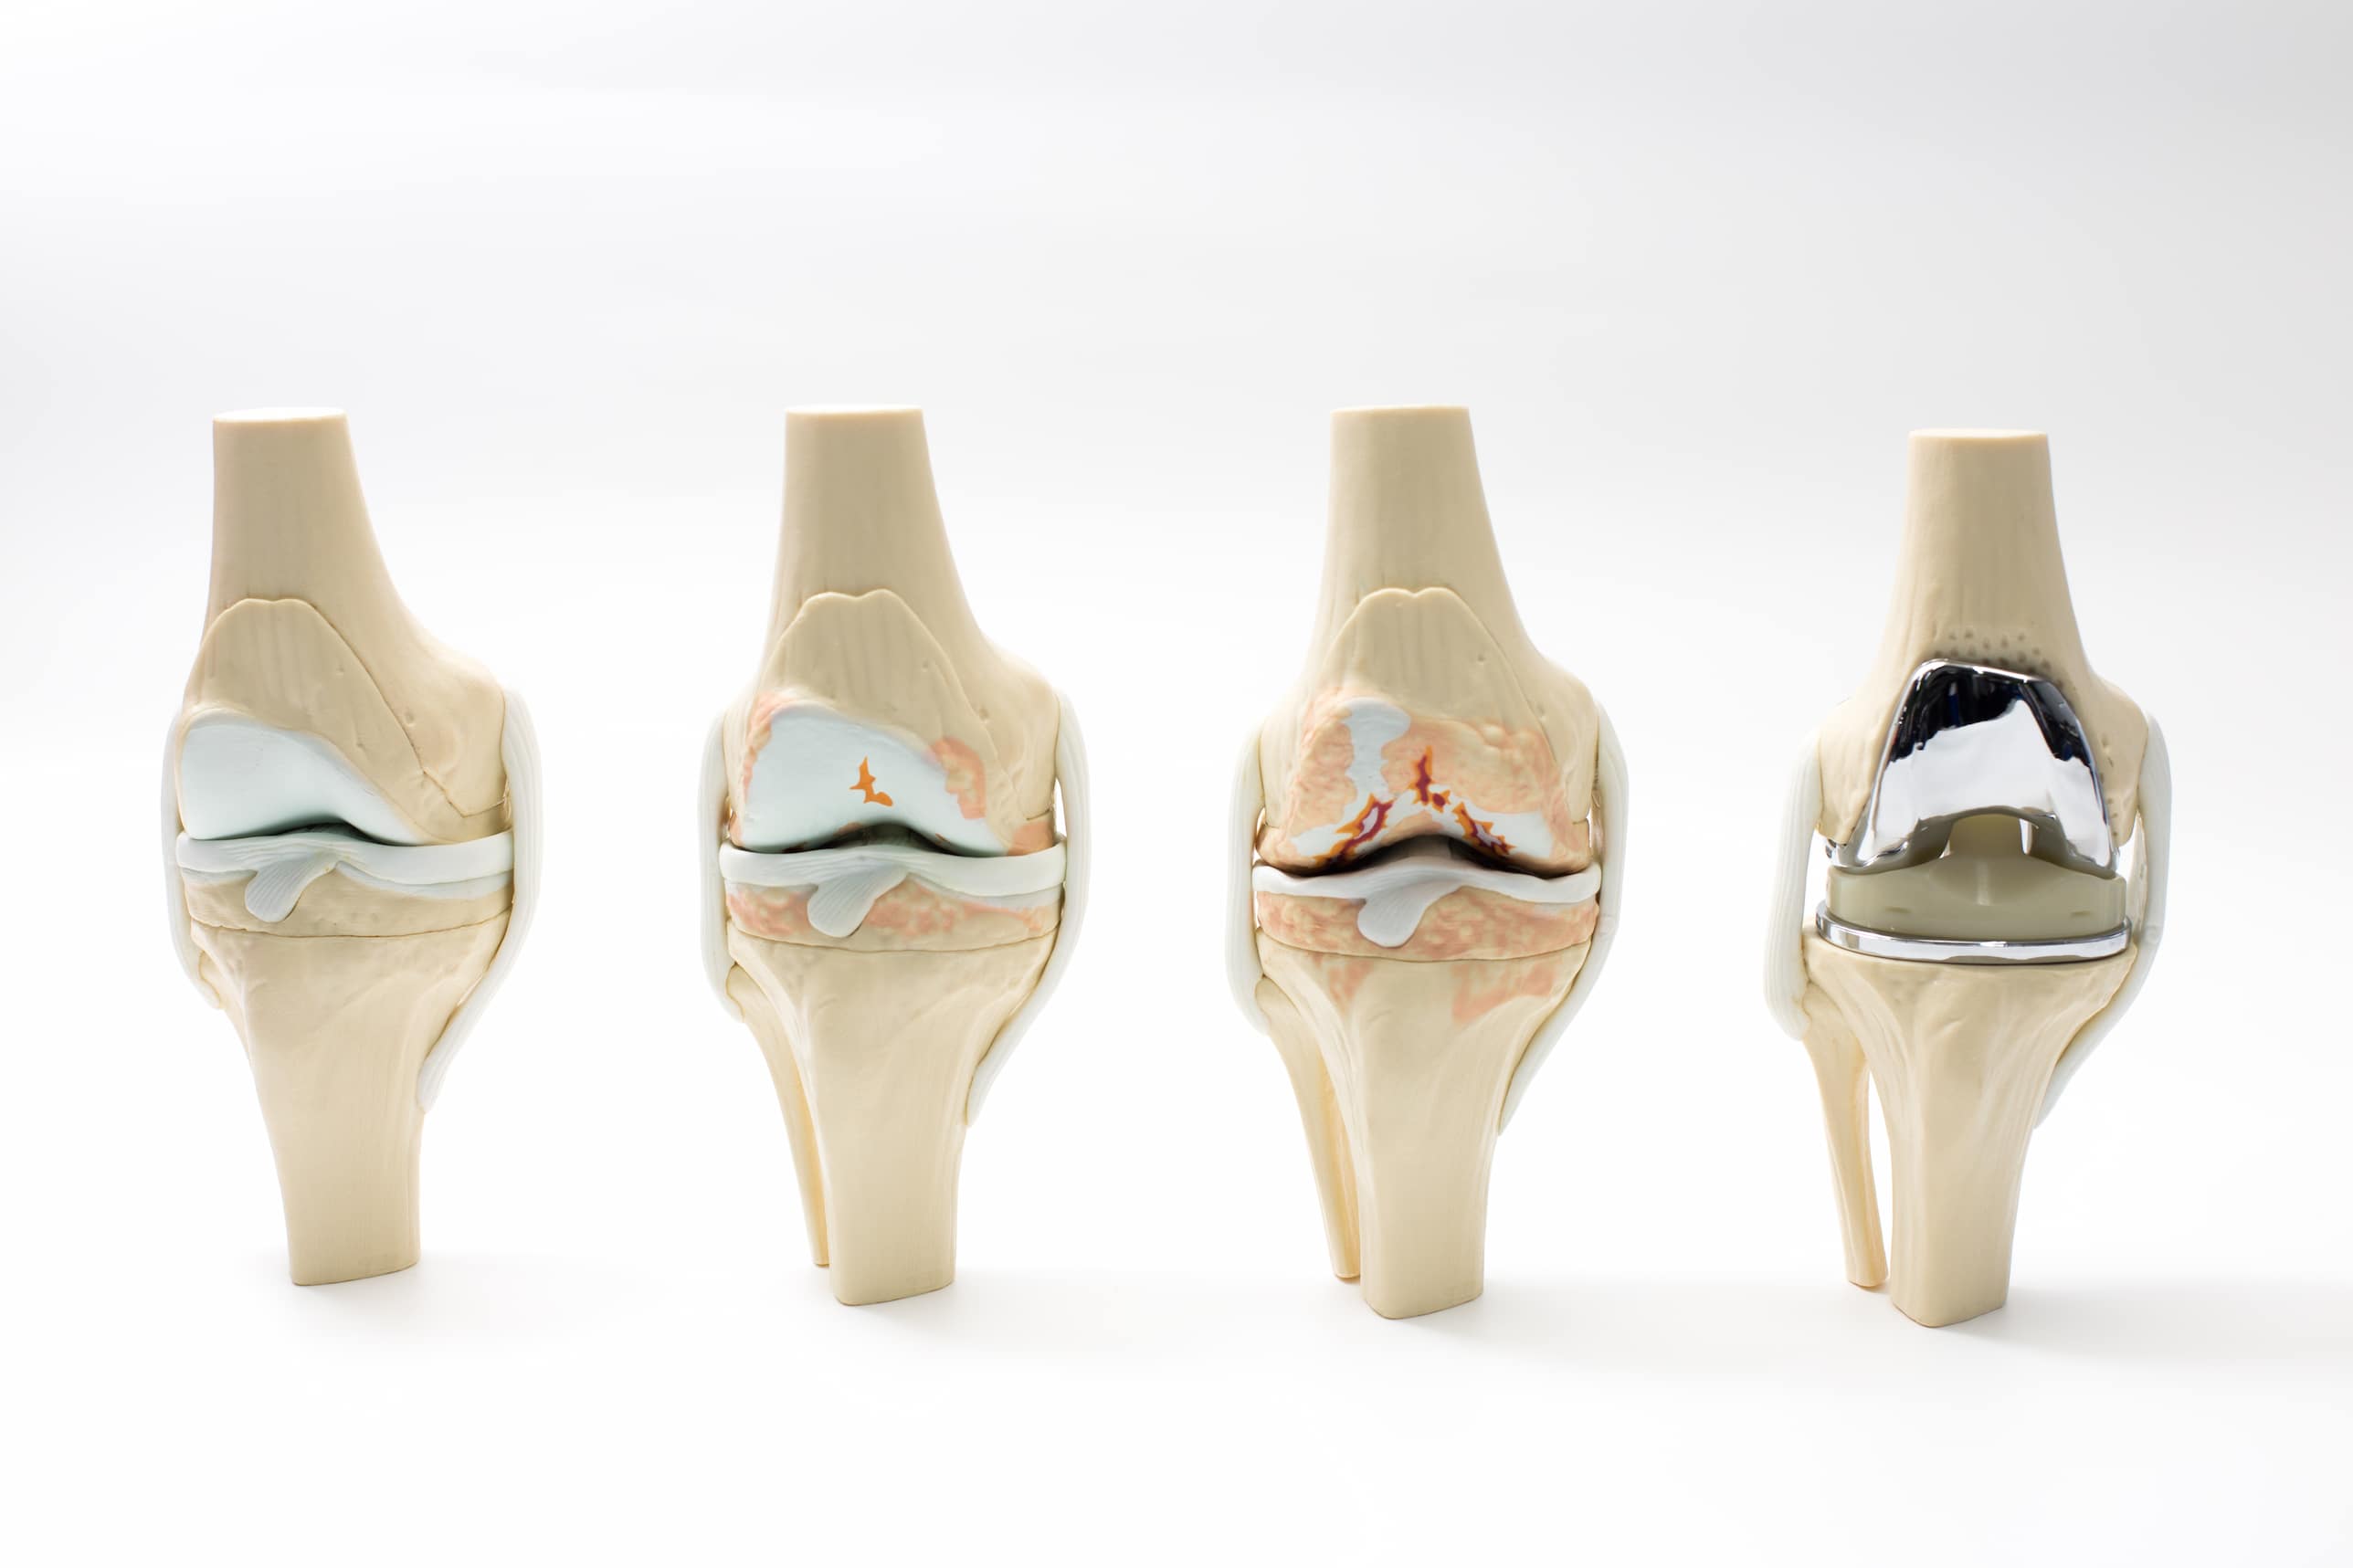 Turkiye knee replacement surgery procedure